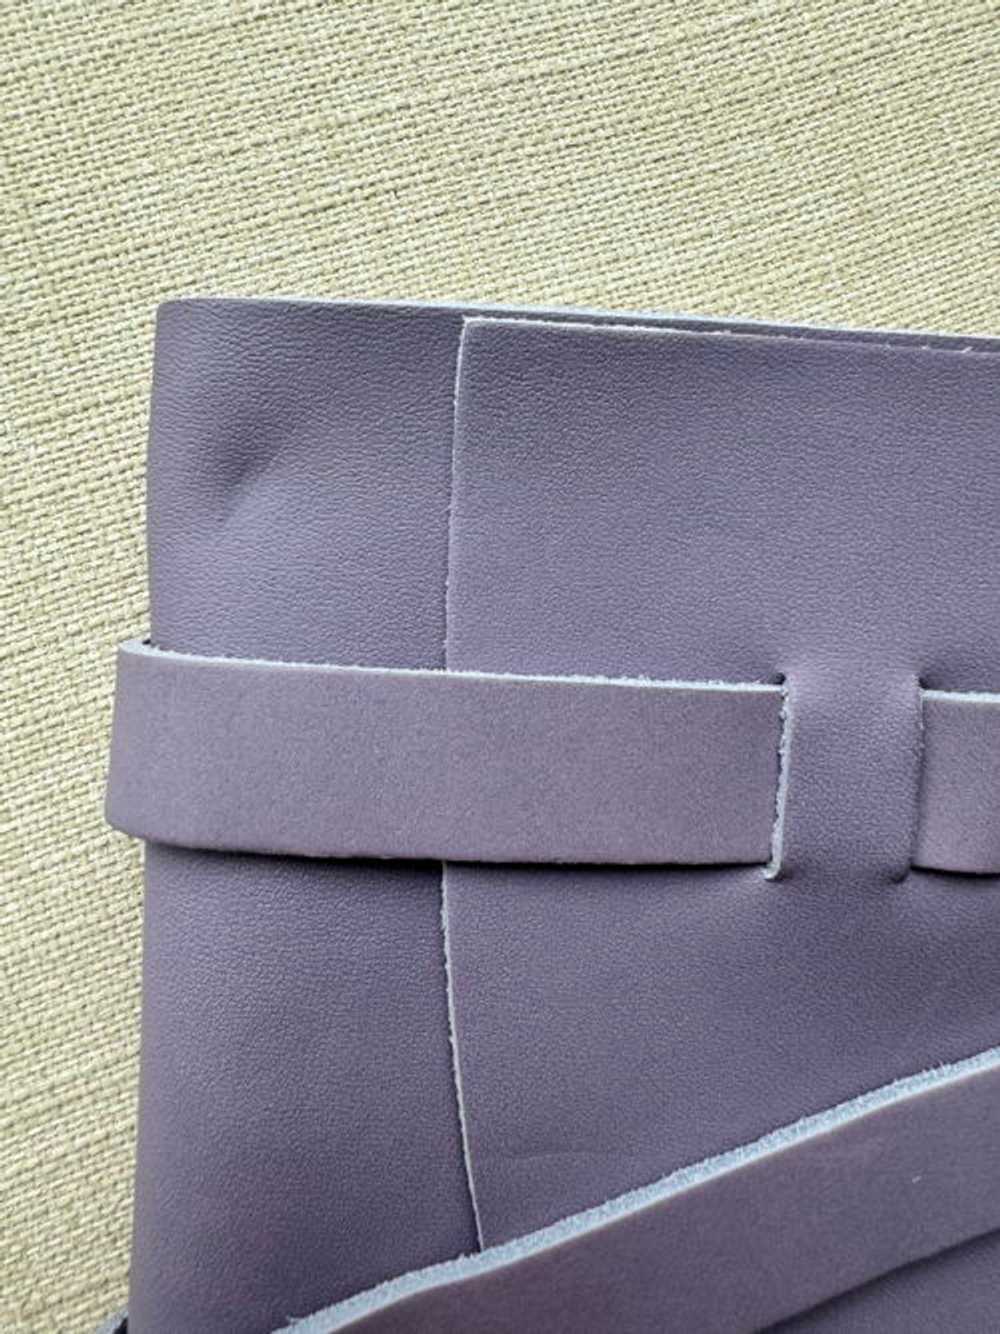 Portland Leather Medium Wrap Journal - Lavender - image 4